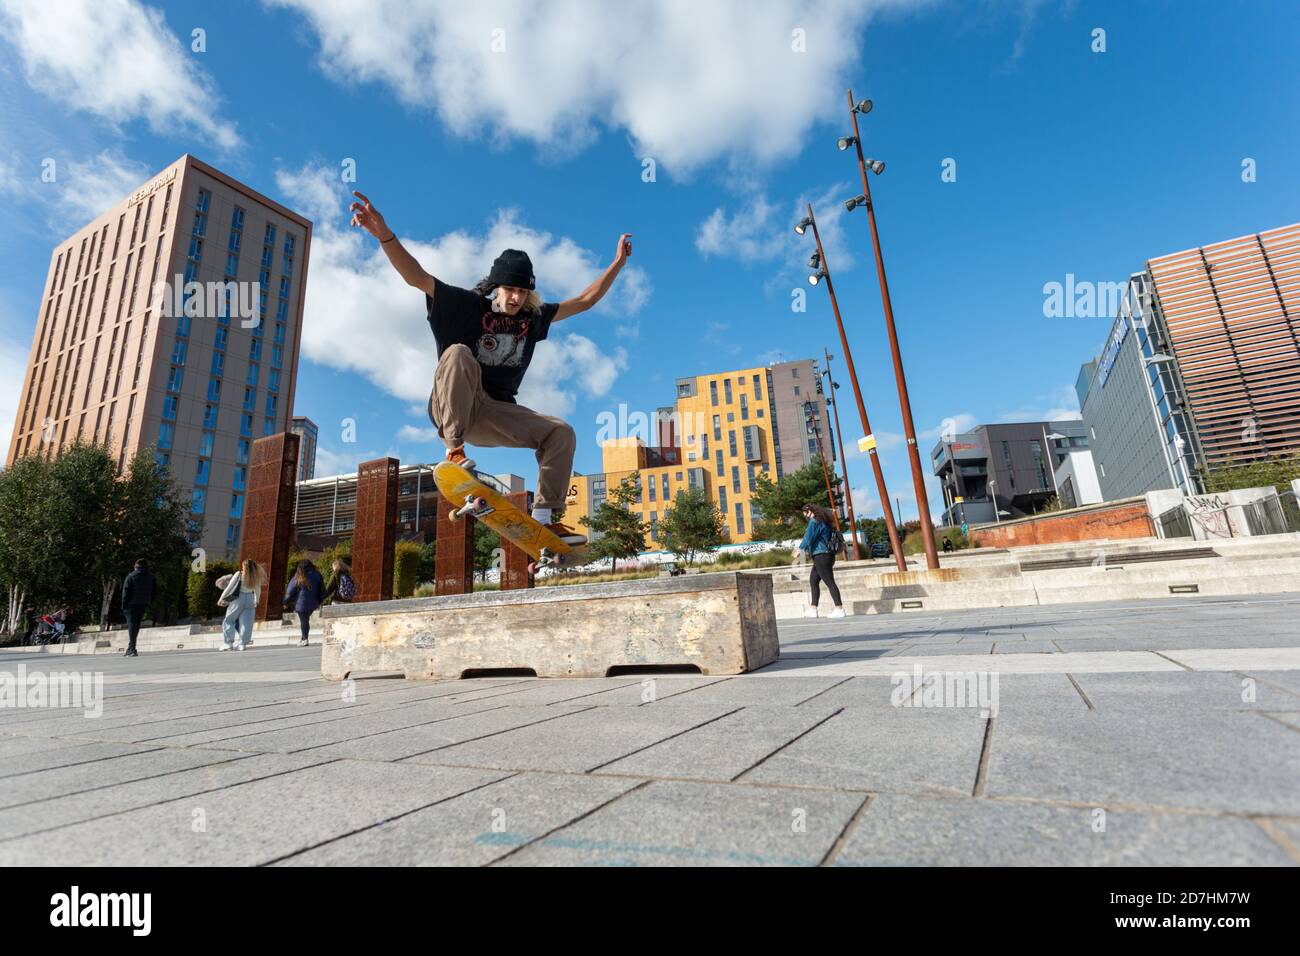 Young skateboarder, Birmingham, Eastside, UK Stock Photo